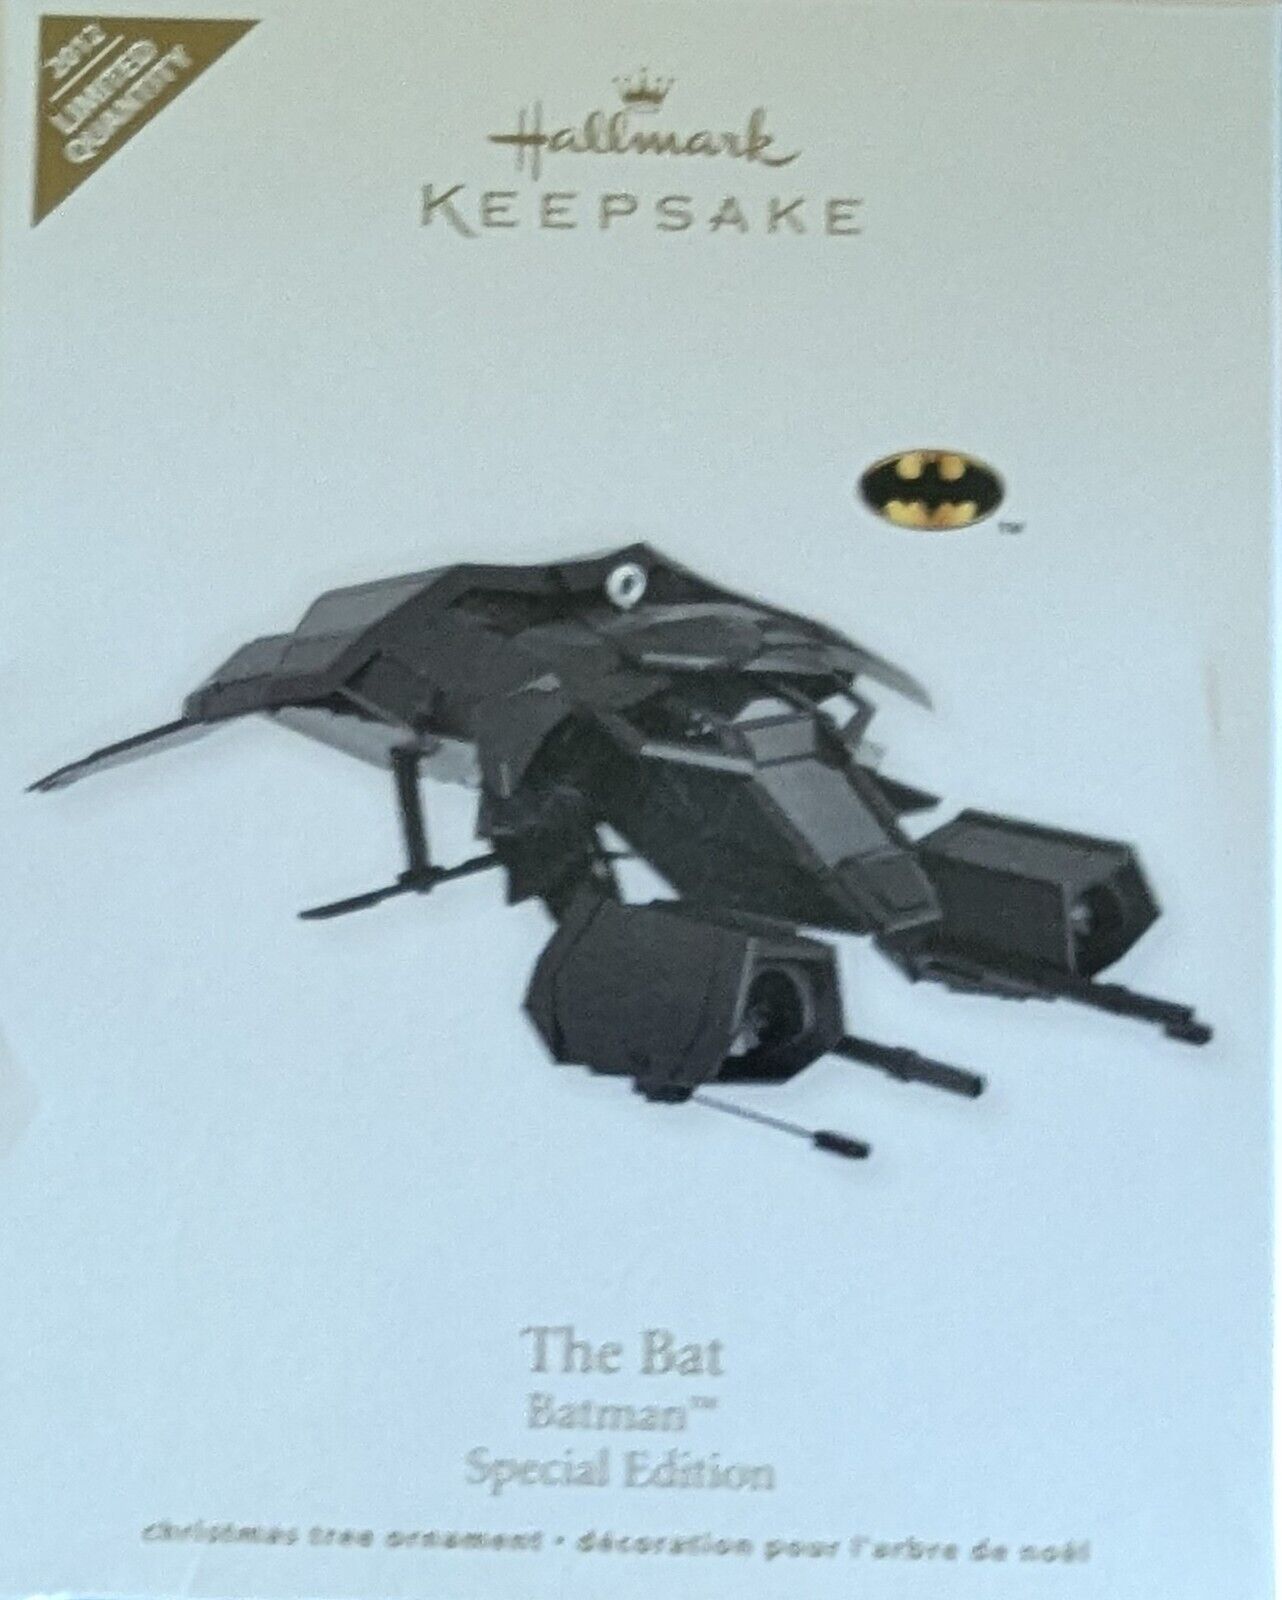 2012 Hallmark Keepsake The Bat Batman Limited Special Edition Ornament NEW NEW